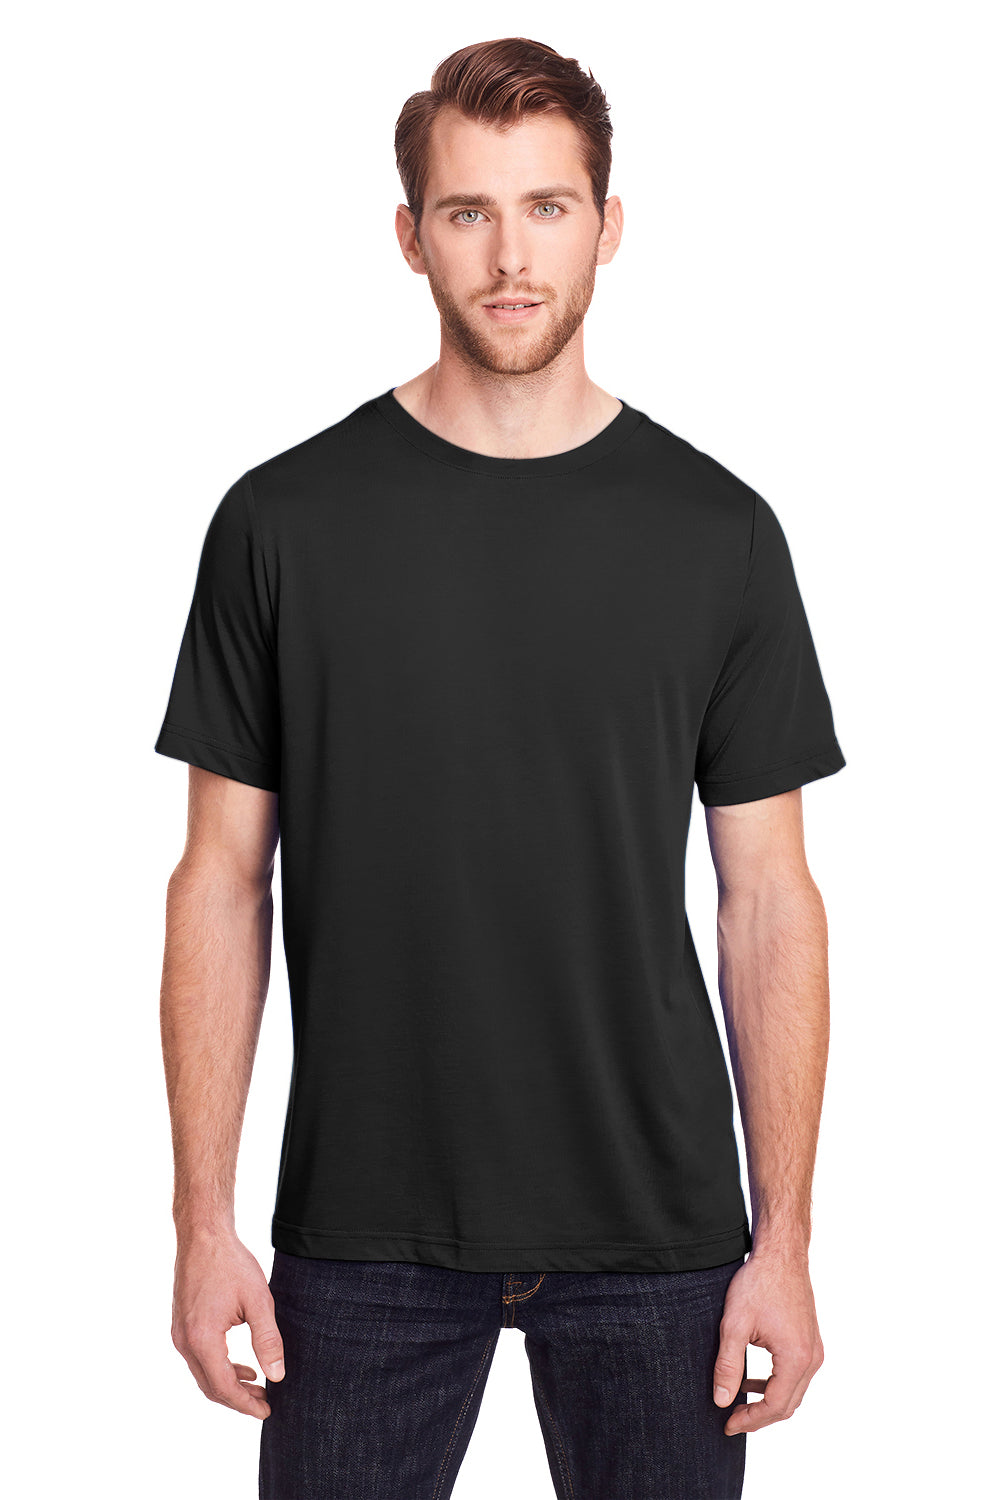 Core 365 CE111 Mens Fusion ChromaSoft Performance Moisture Wicking Short Sleeve Crewneck T-Shirt Black Front